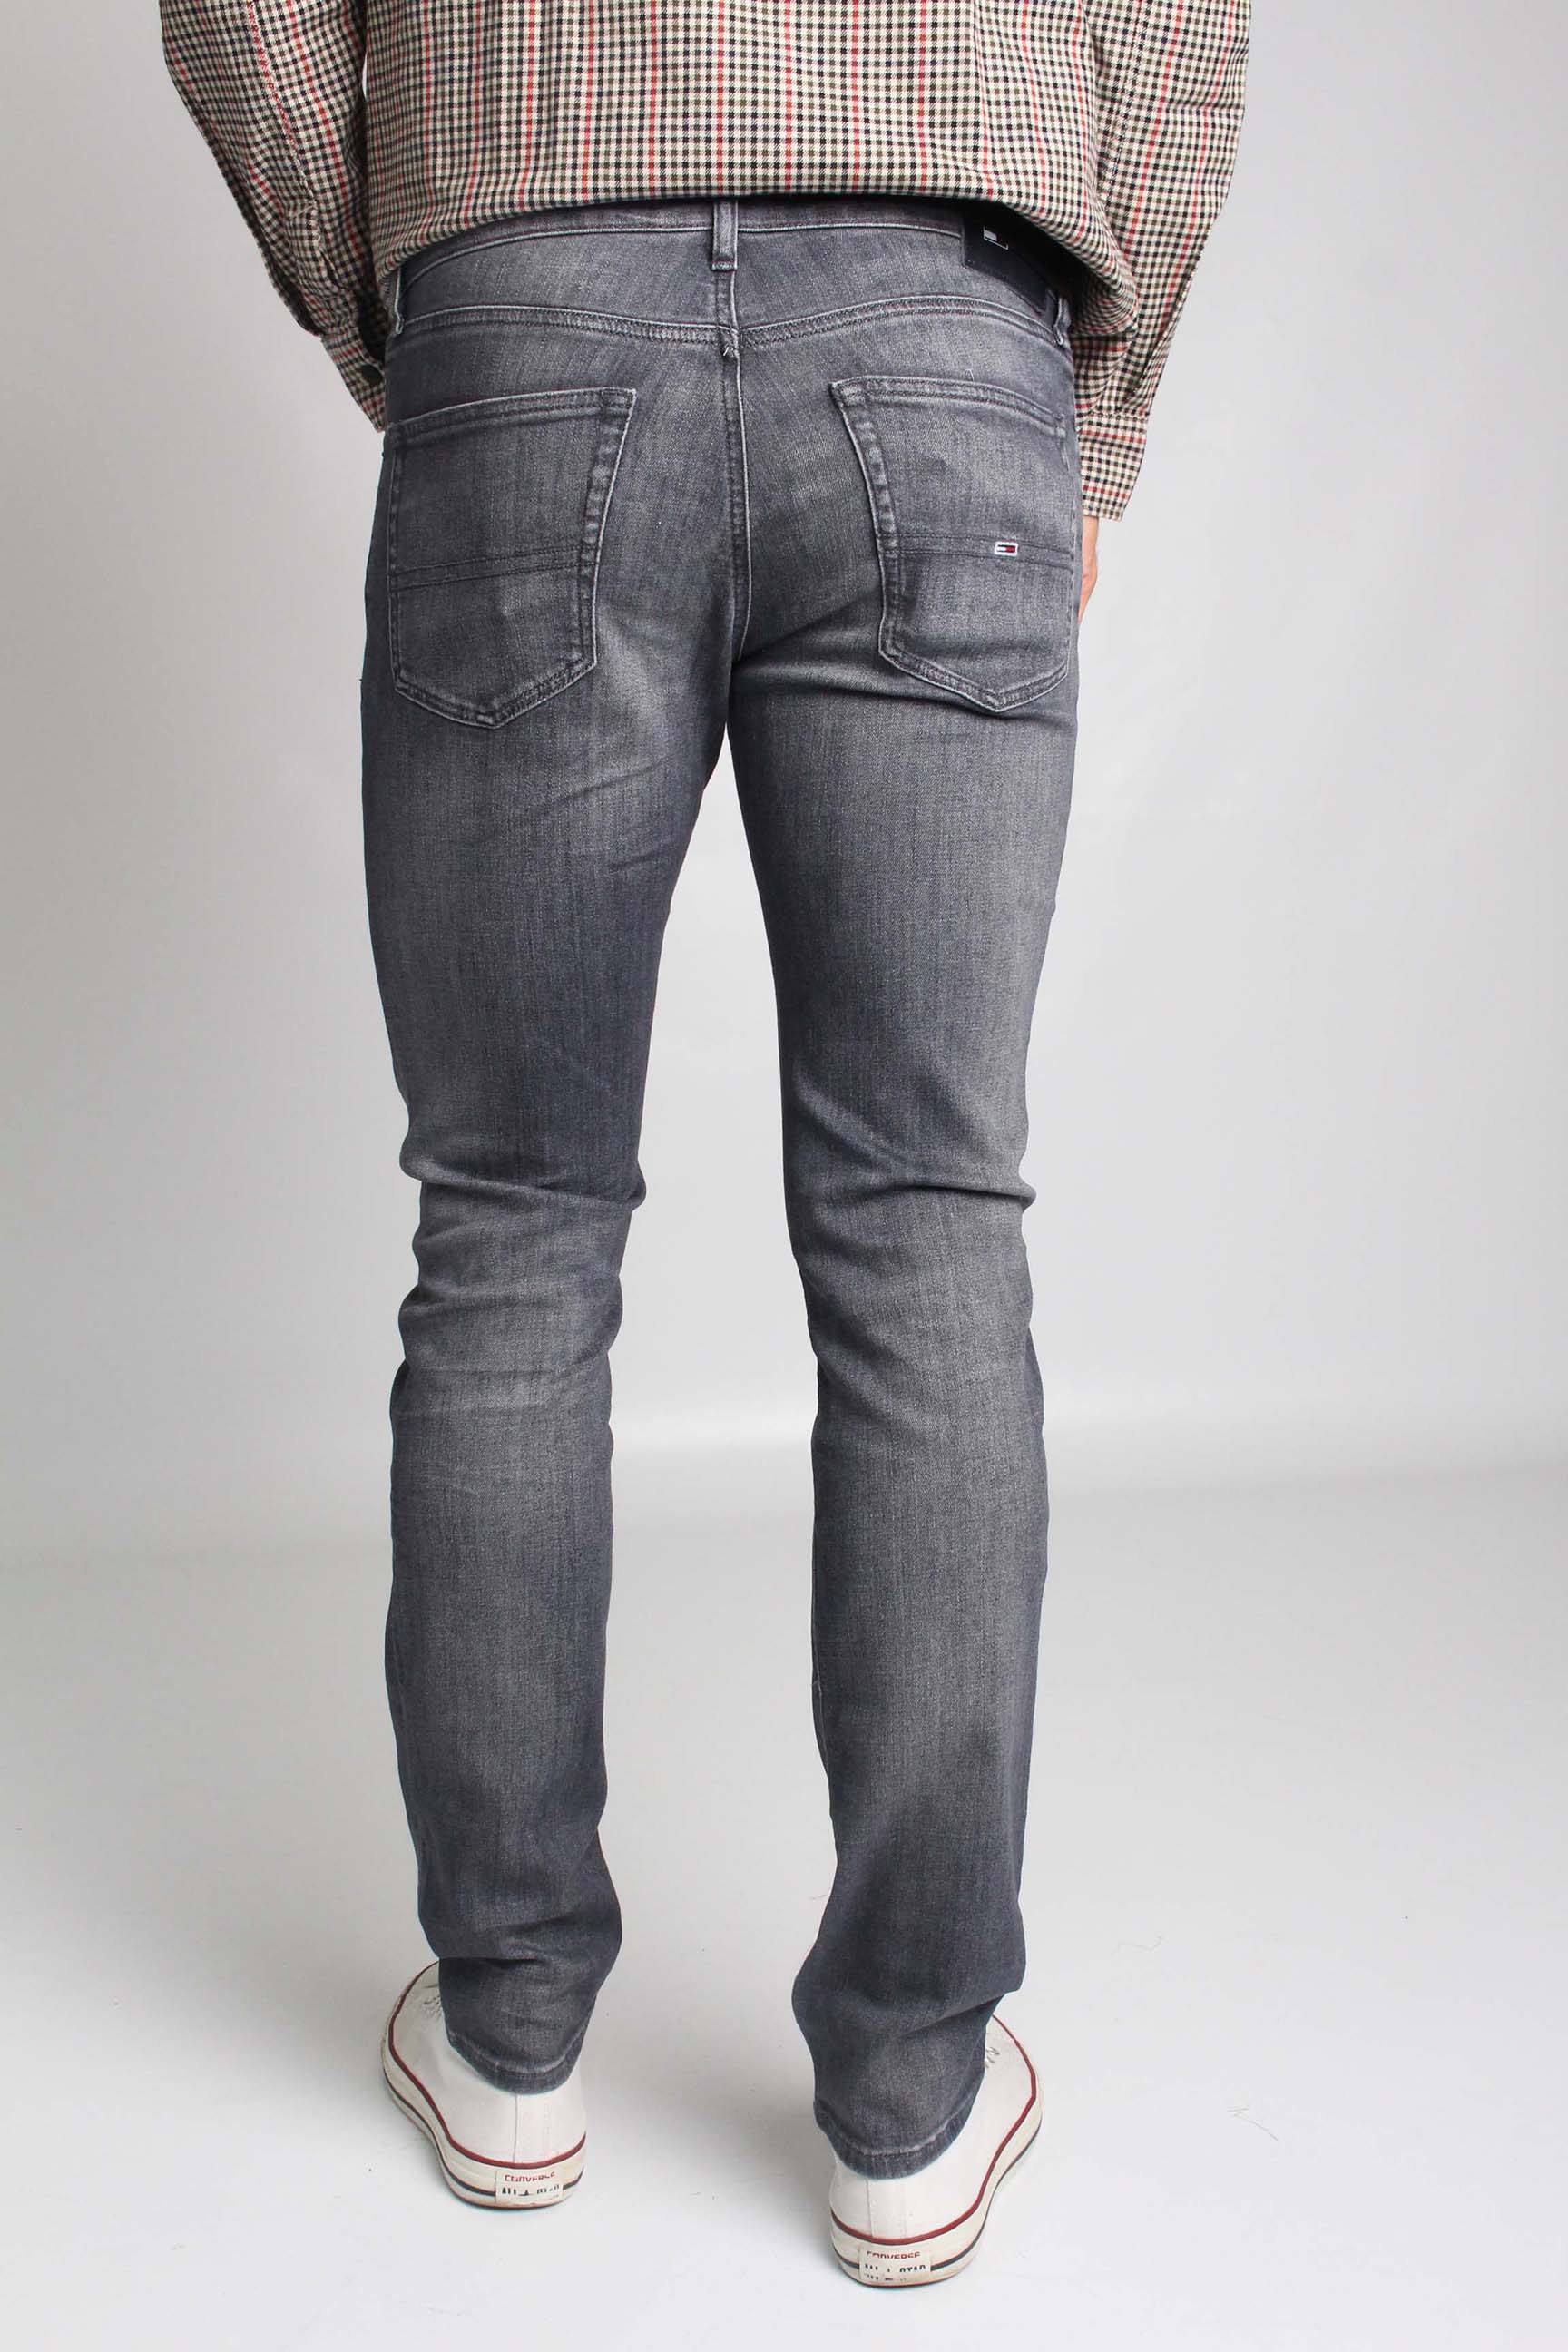 legaal onwettig passagier TOMMY HILFIGER Herren Jeans - "Scanton Jeans Black Denim" | Tayler Fashion